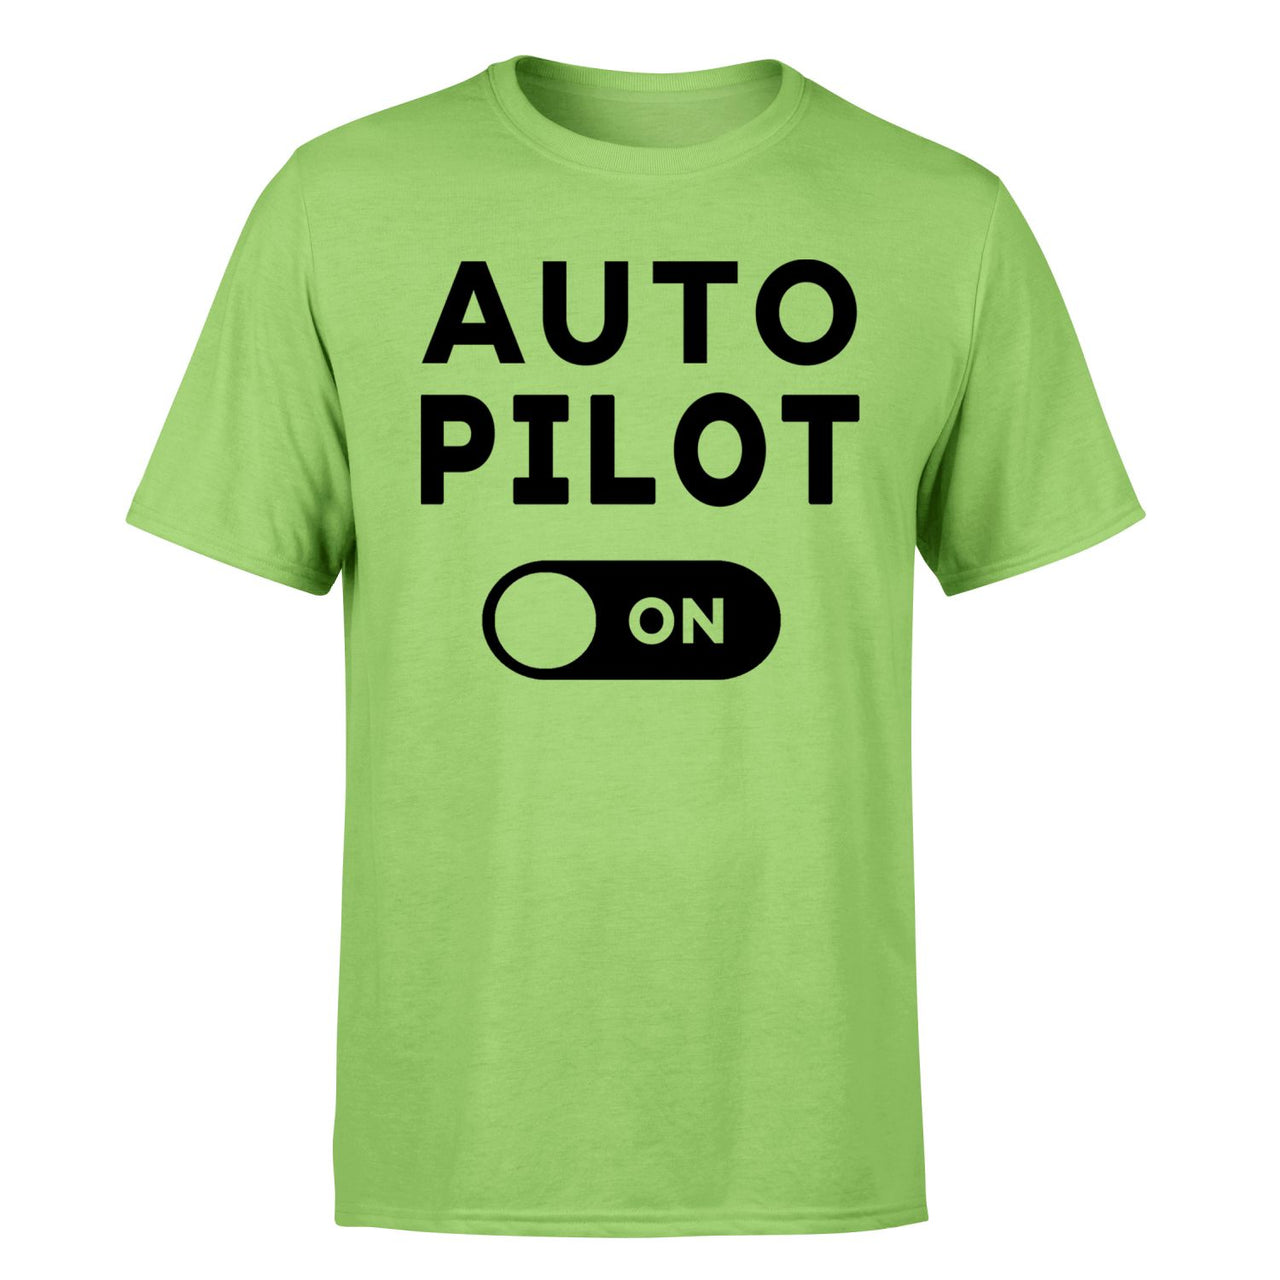 Auto Pilot ON Designed T-Shirts